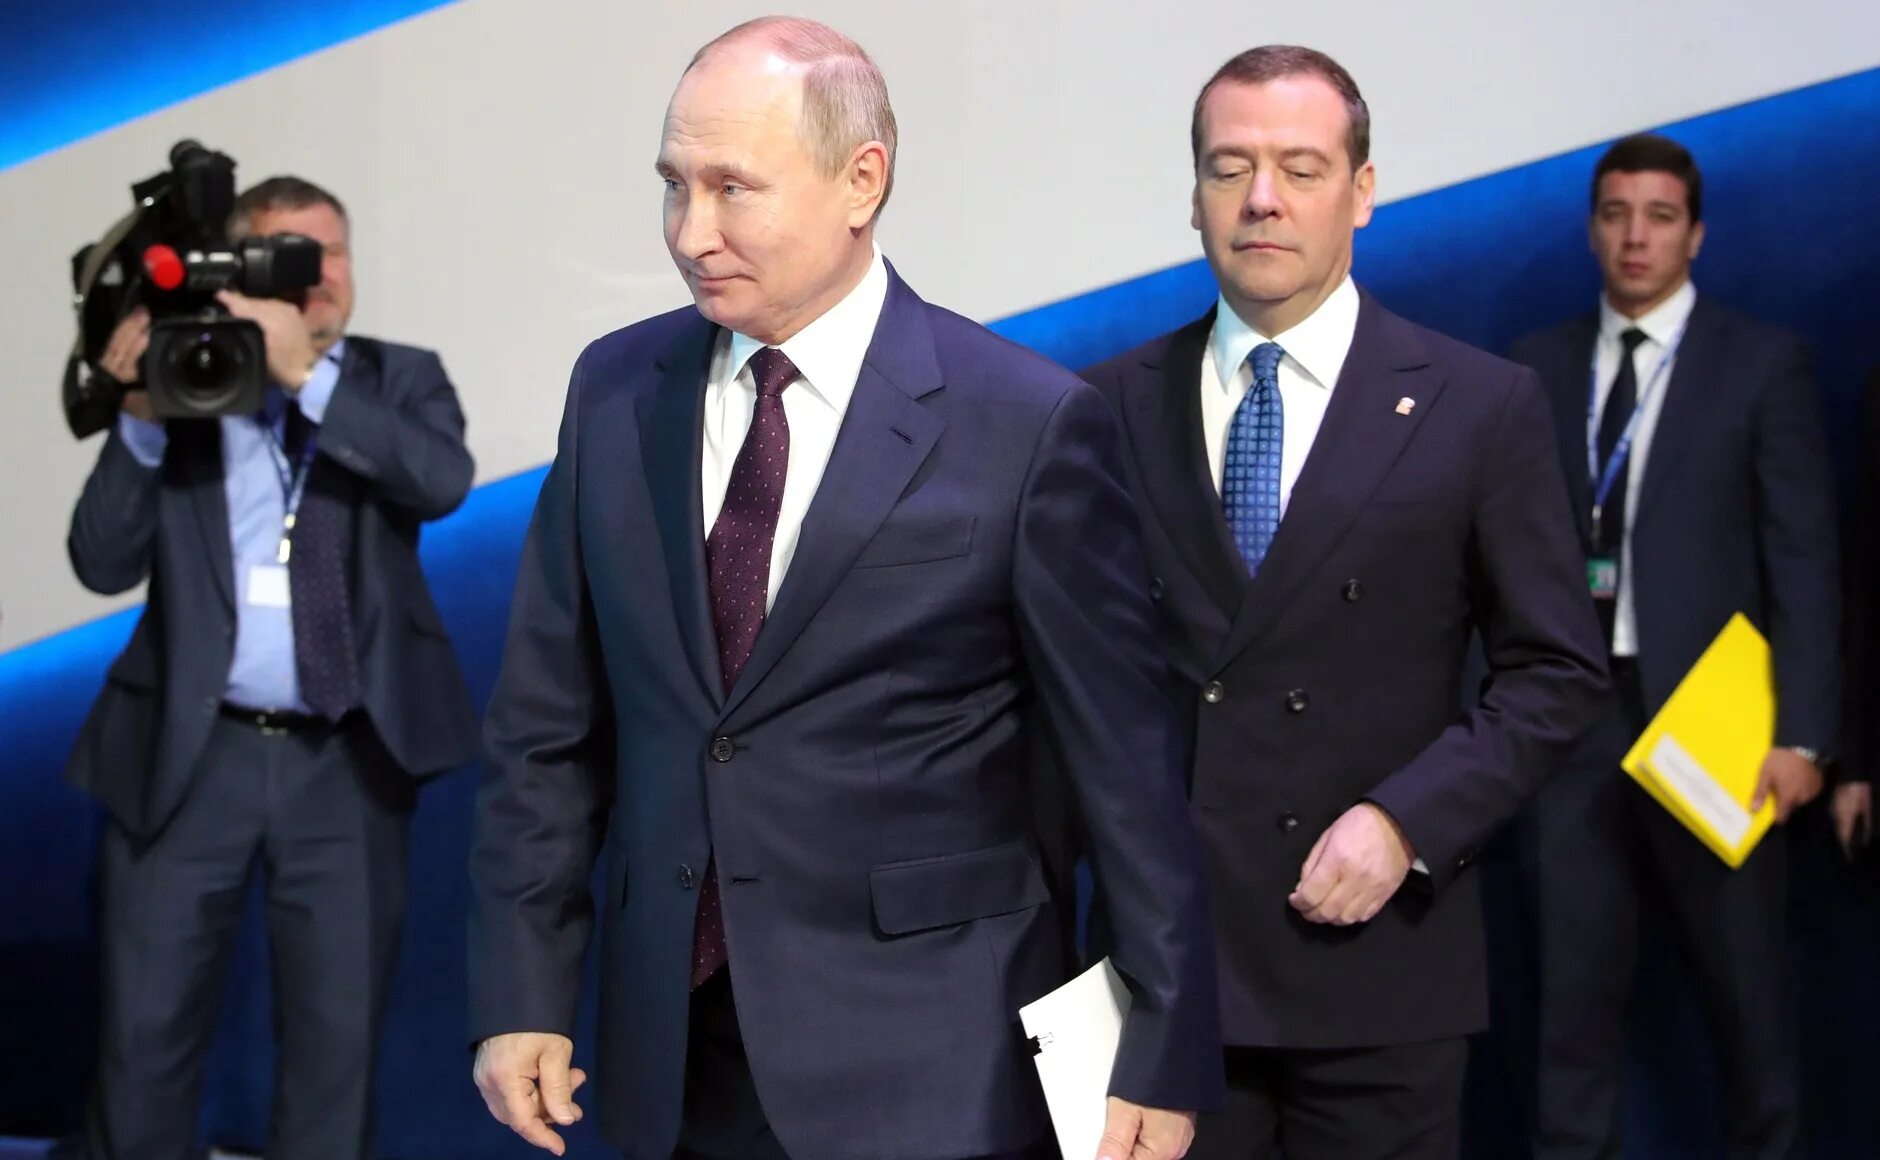 Новости про политиков. Фото Дмитрия Медведева 2021.